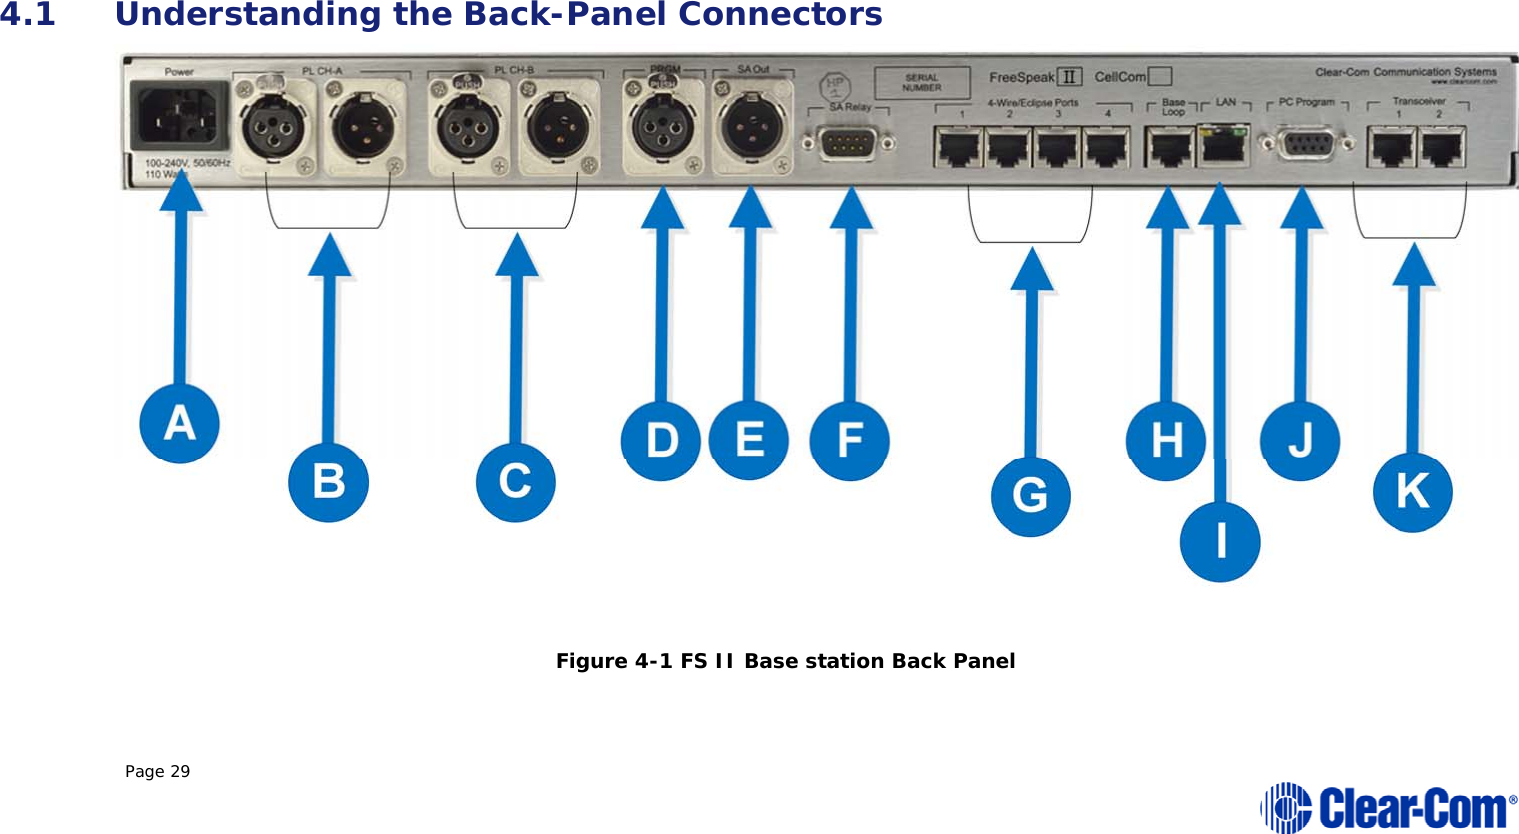  Page 29    4.1 Understanding the Back-Panel Connectors    Figure 4-1 FS II Base station Back Panel 